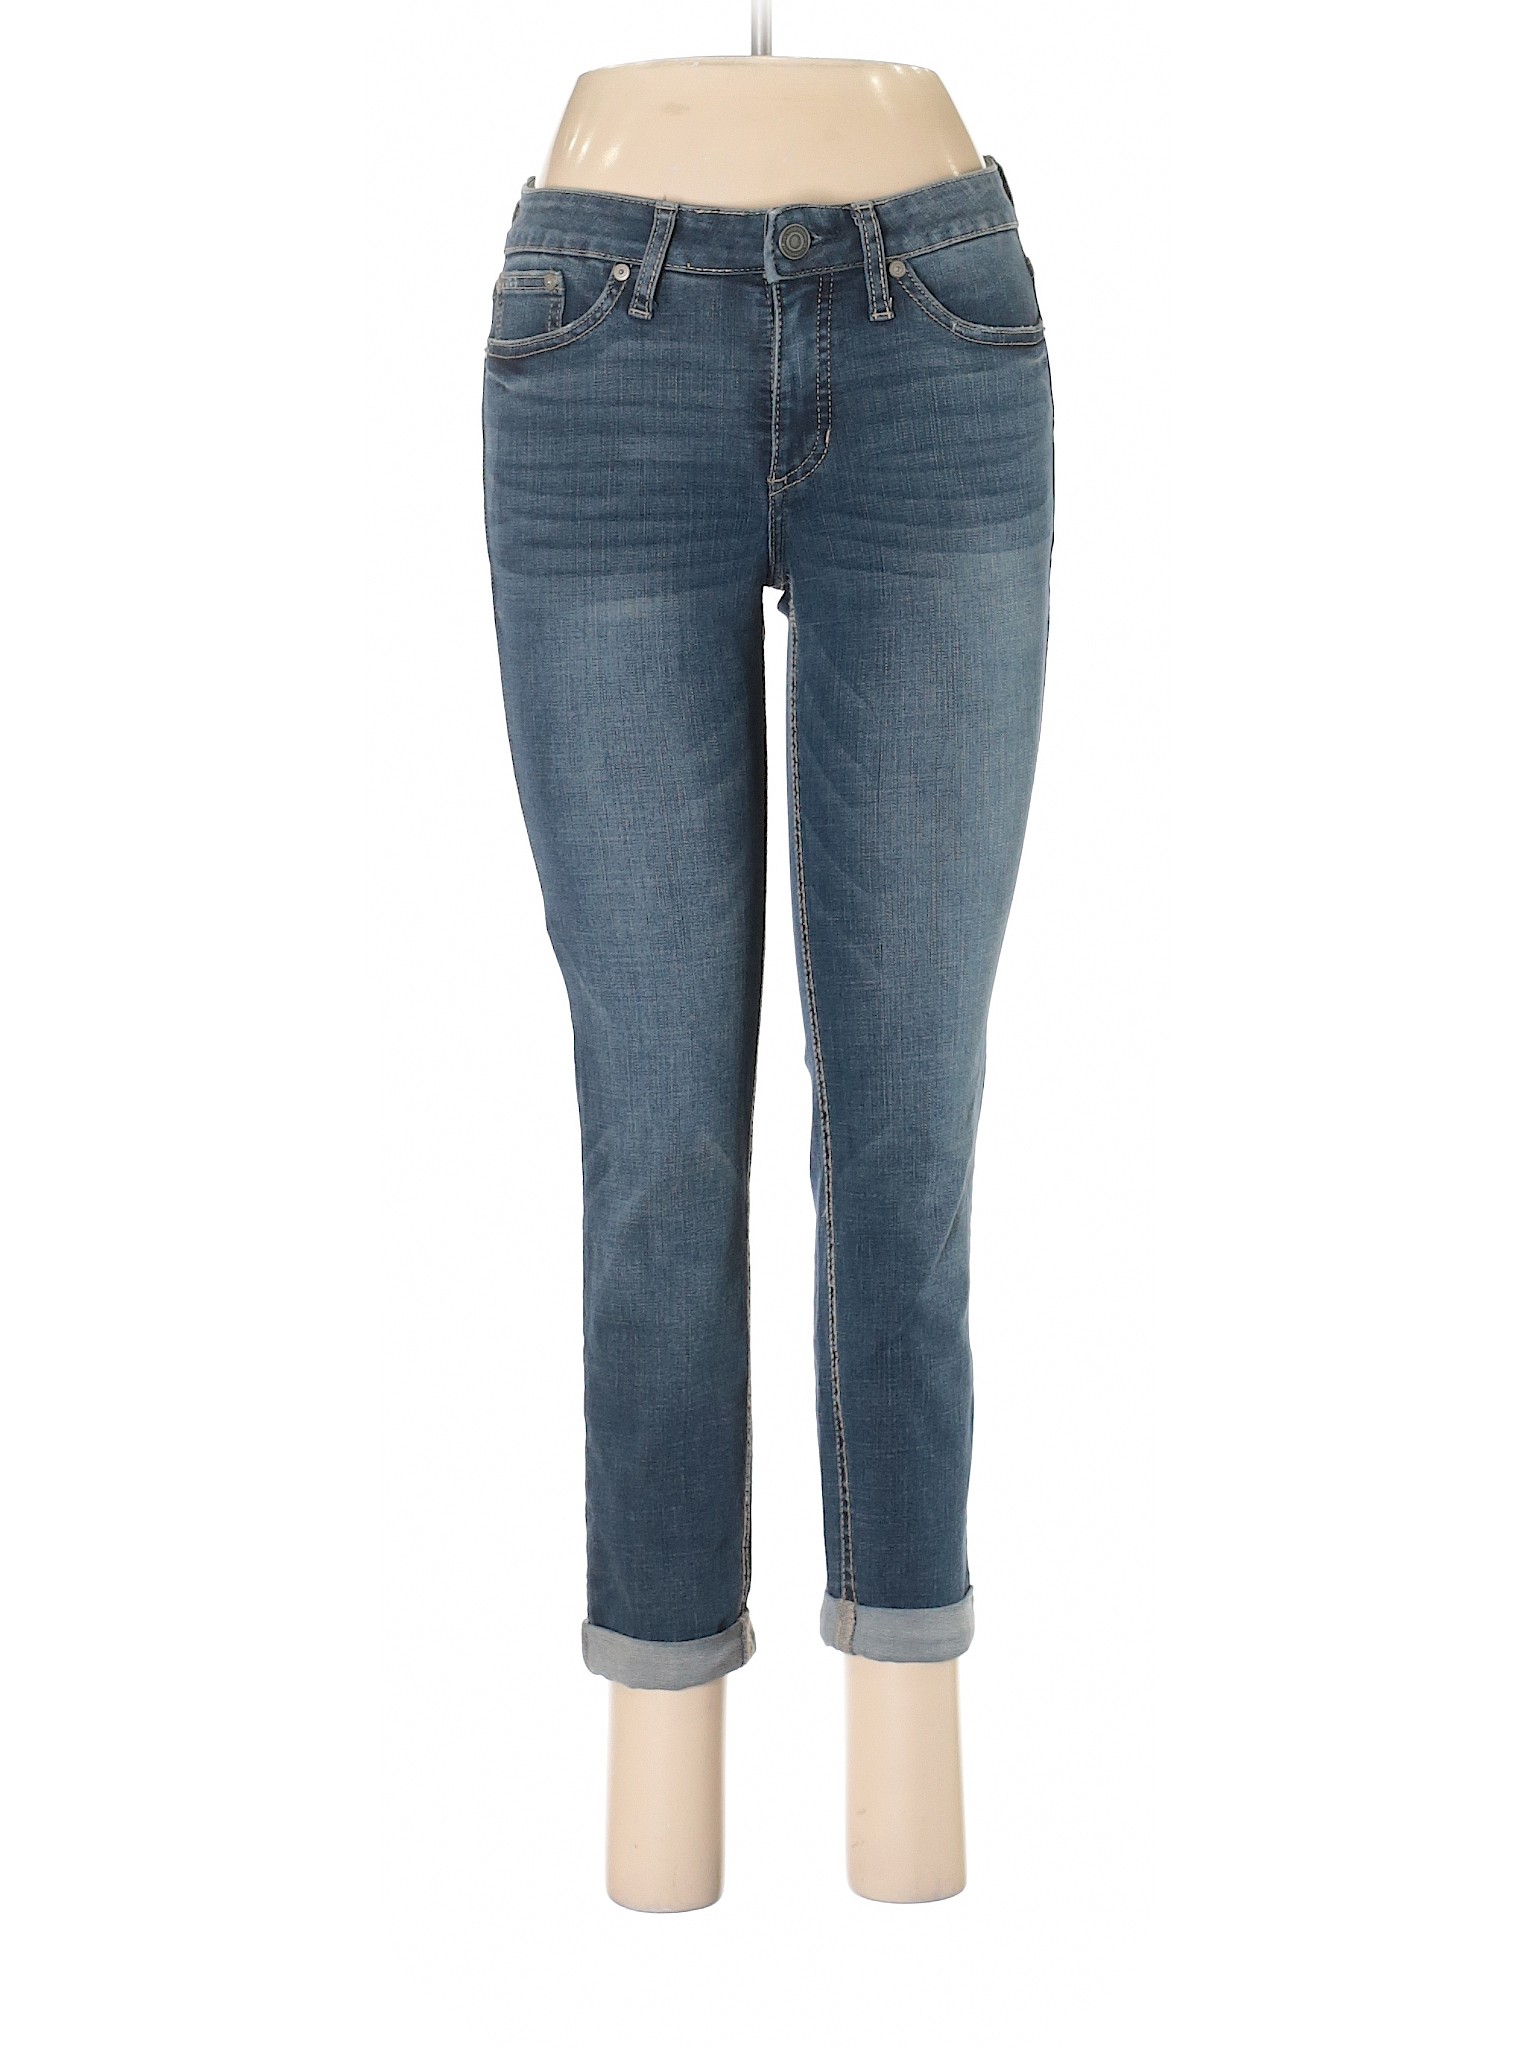 LC Lauren Conrad Women Blue Jeans 8 Petites | eBay